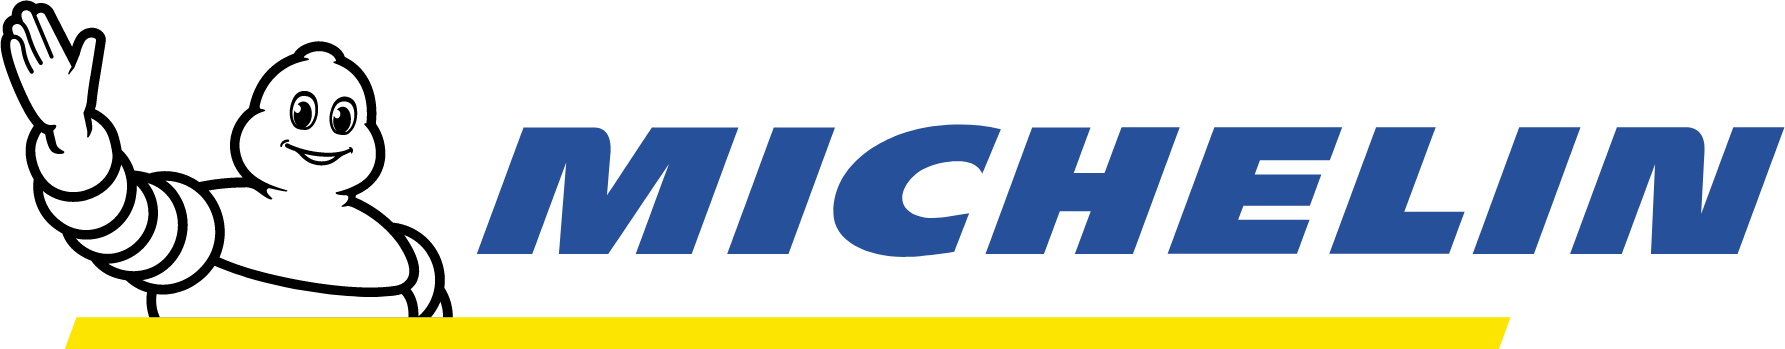 Michelin logo large (transparent PNG)